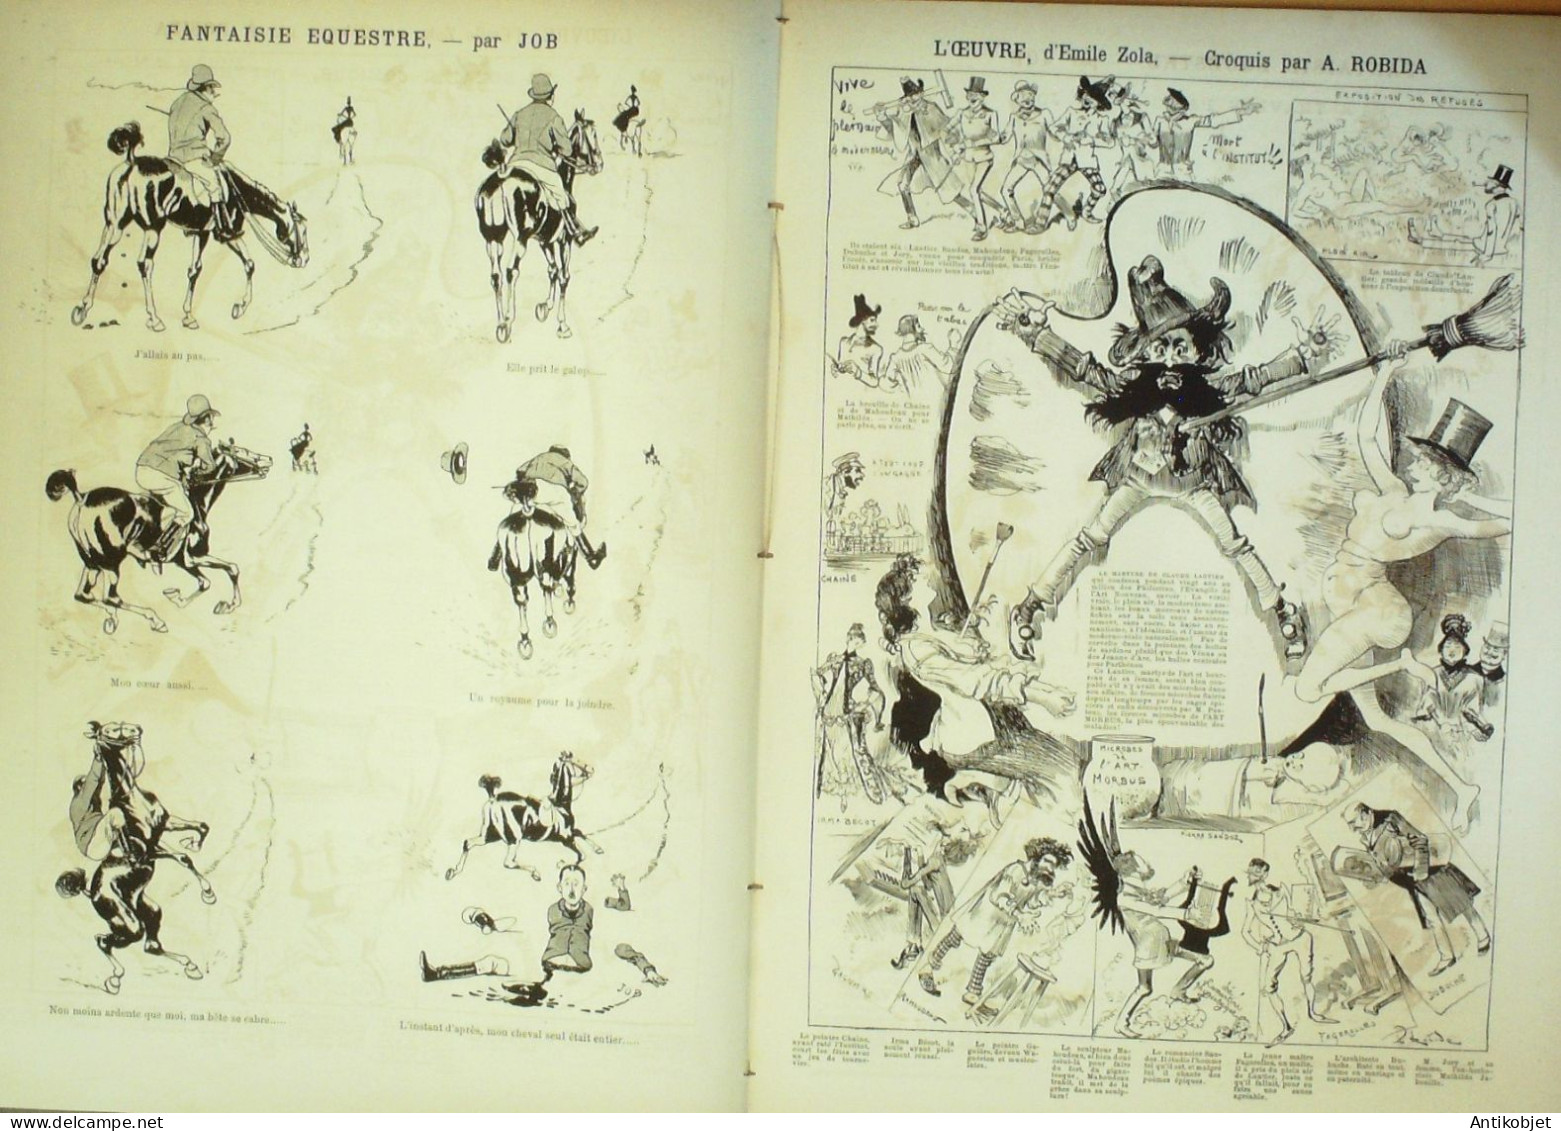 La Caricature 1886 N°332 Place Du Trône Sorel Zola Robida Equitation Job - Zeitschriften - Vor 1900